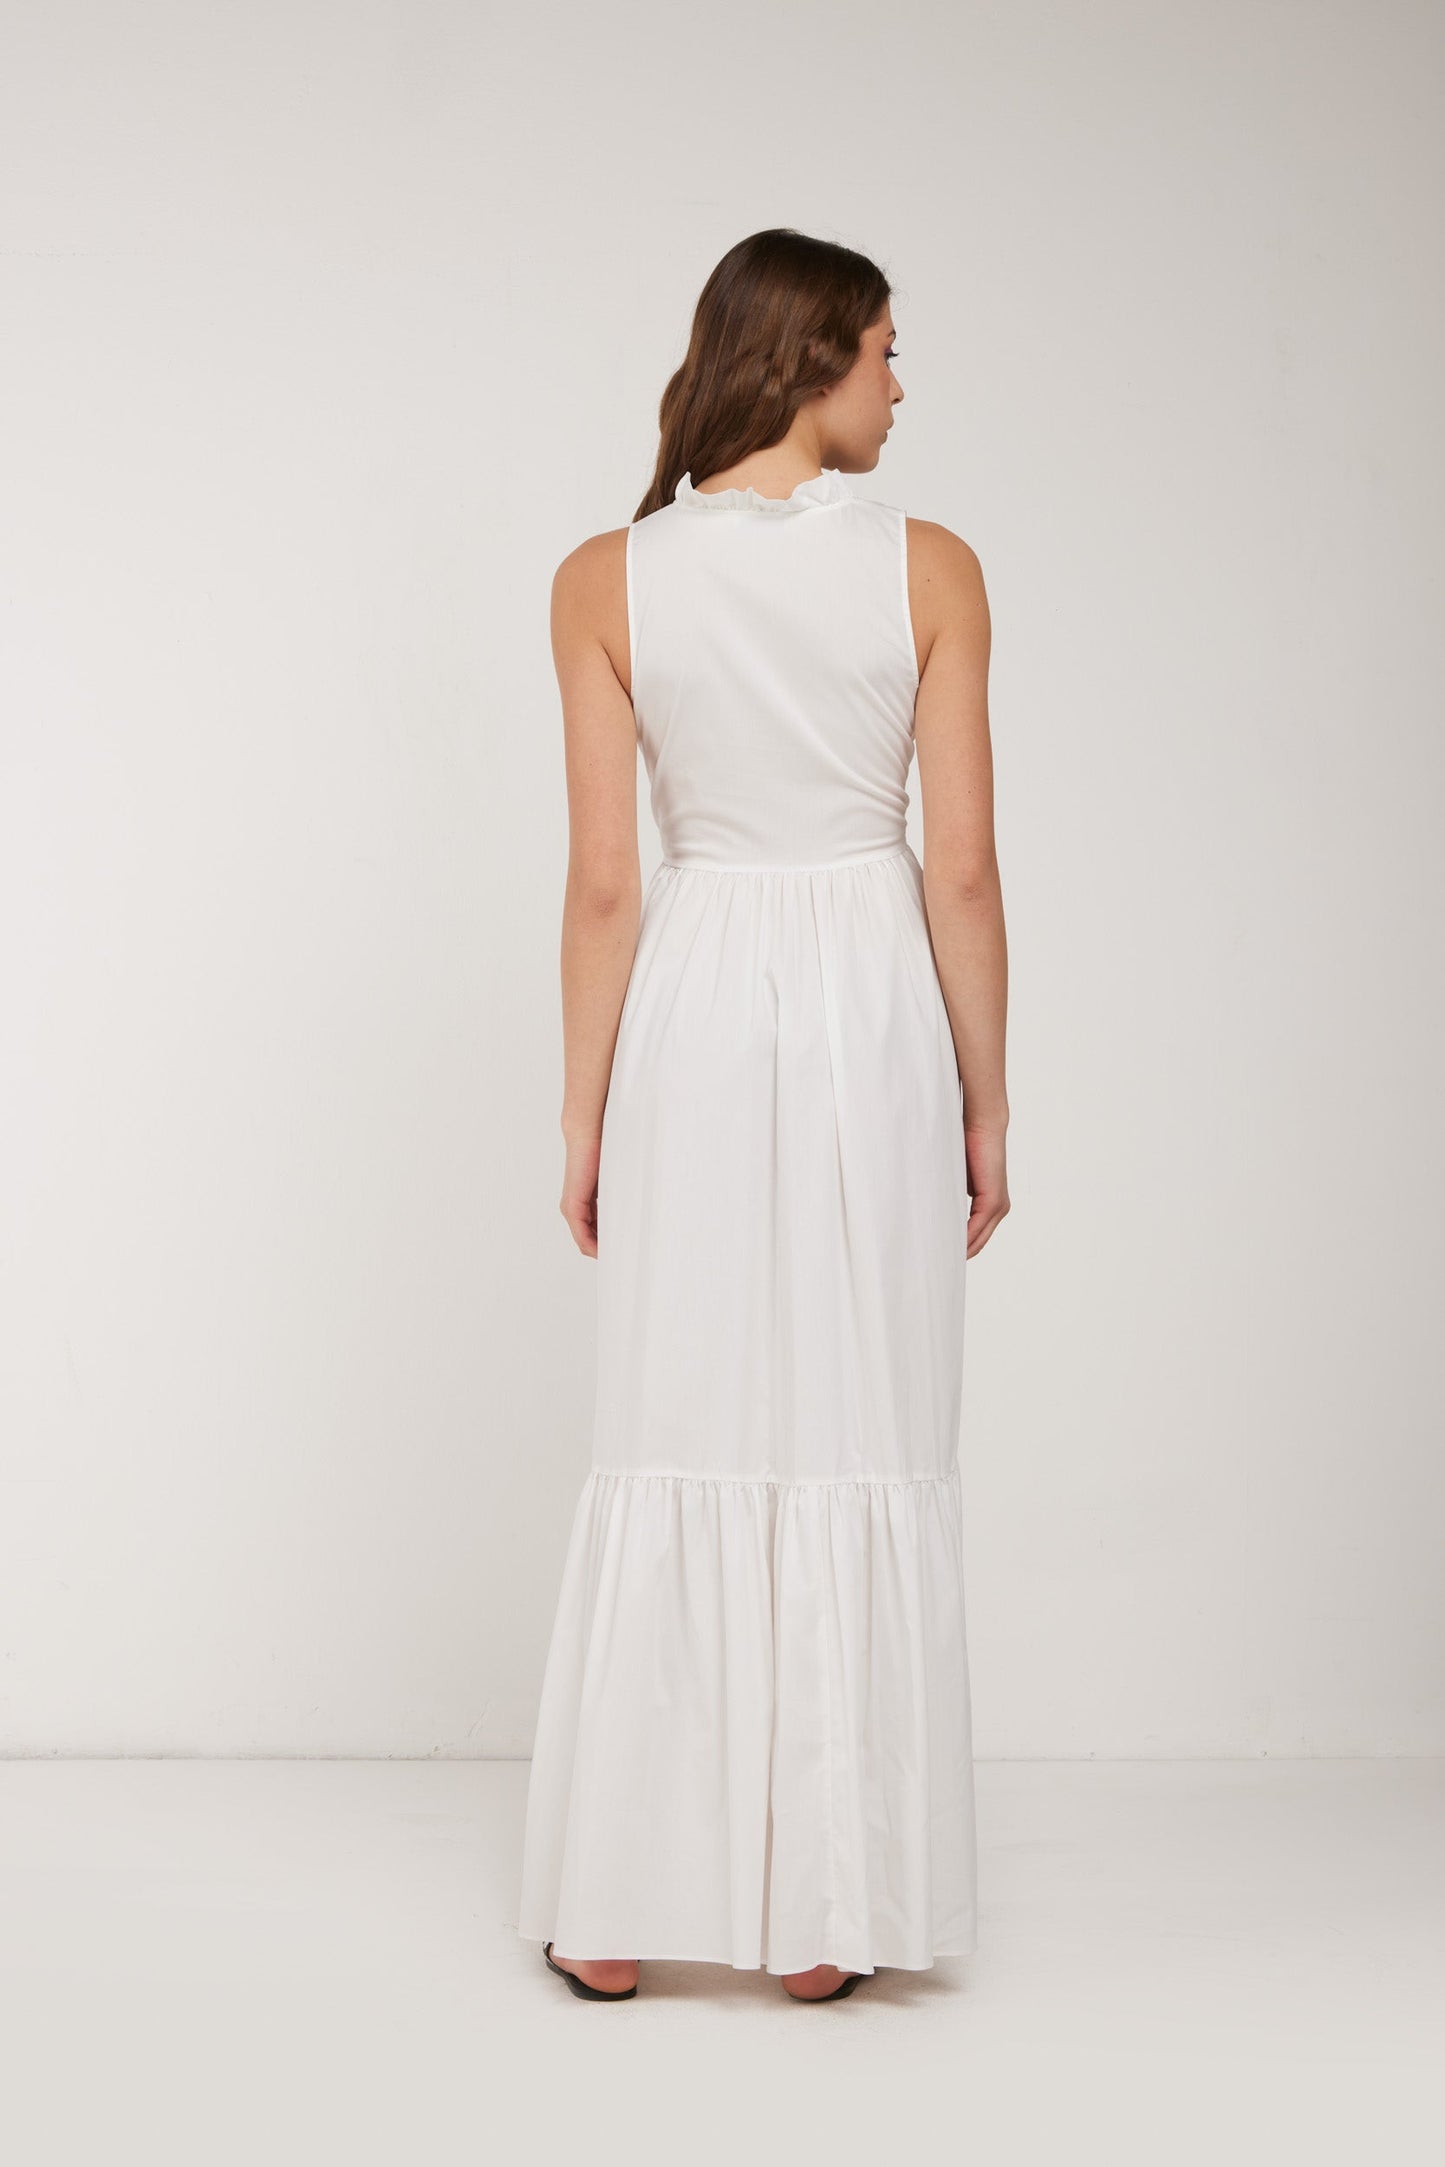 TWINSET Long White Dress